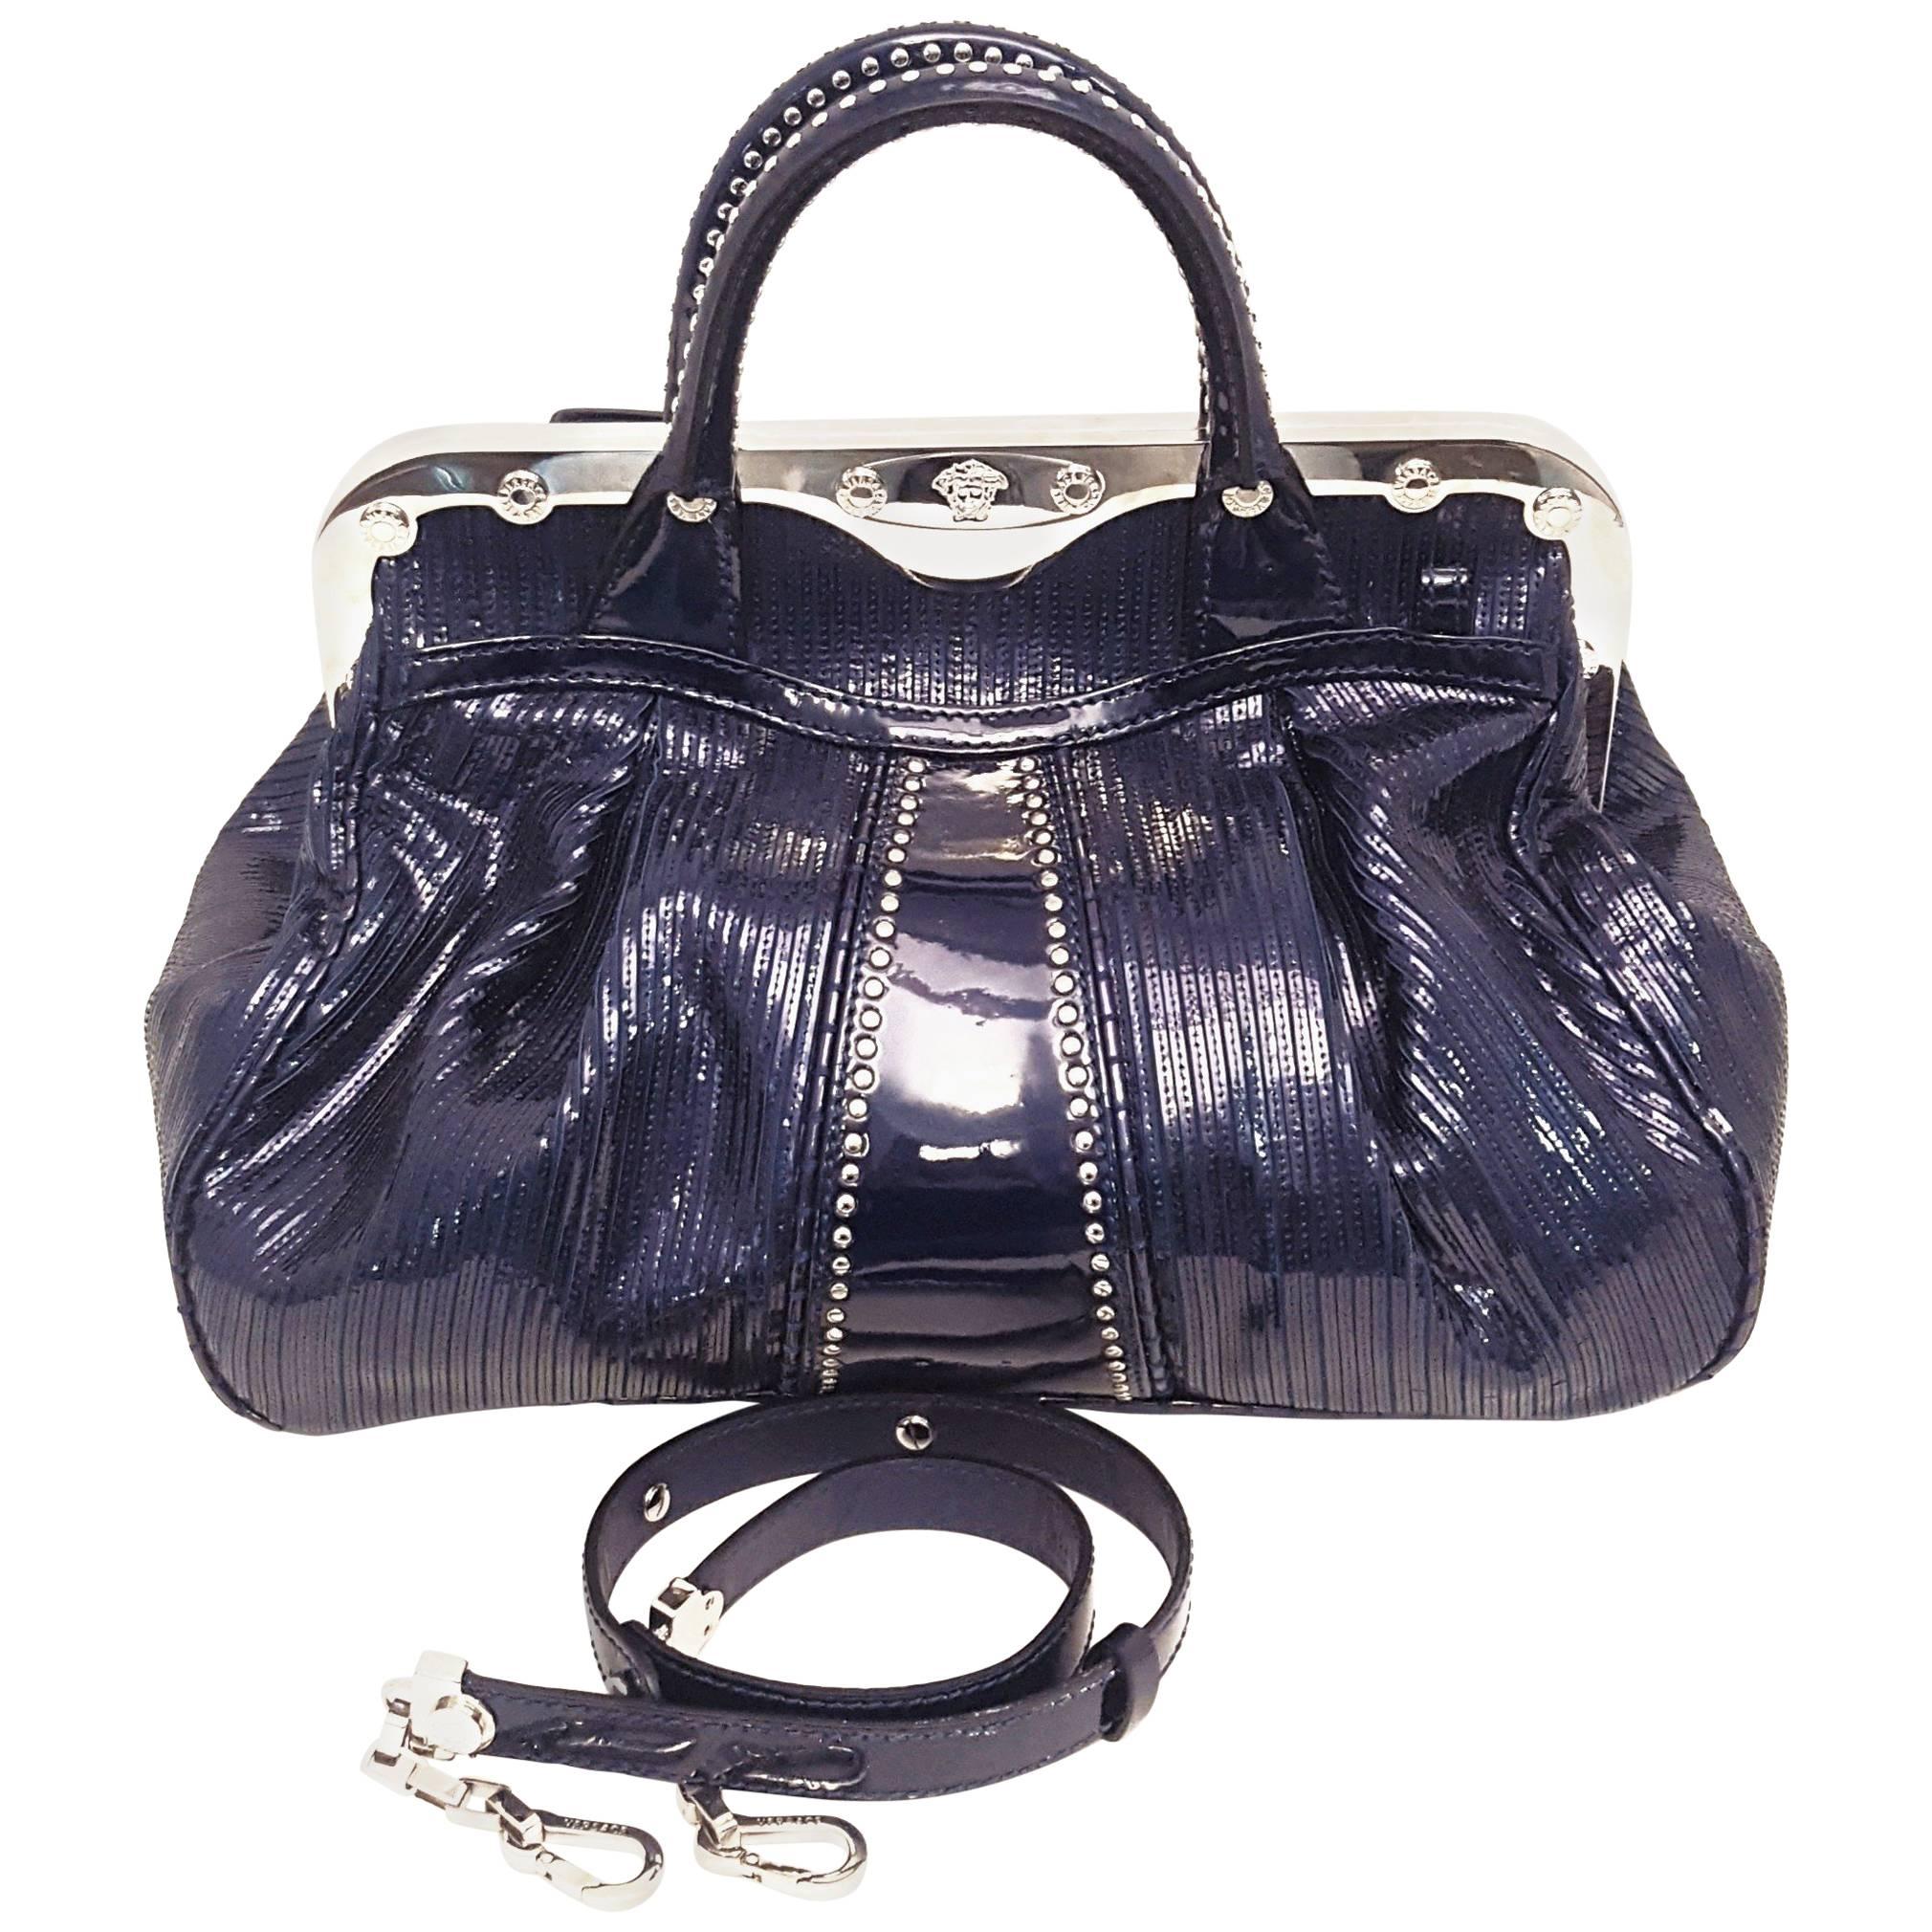 Versace Limited Edition Blue Glitz Patent Leather Satchel